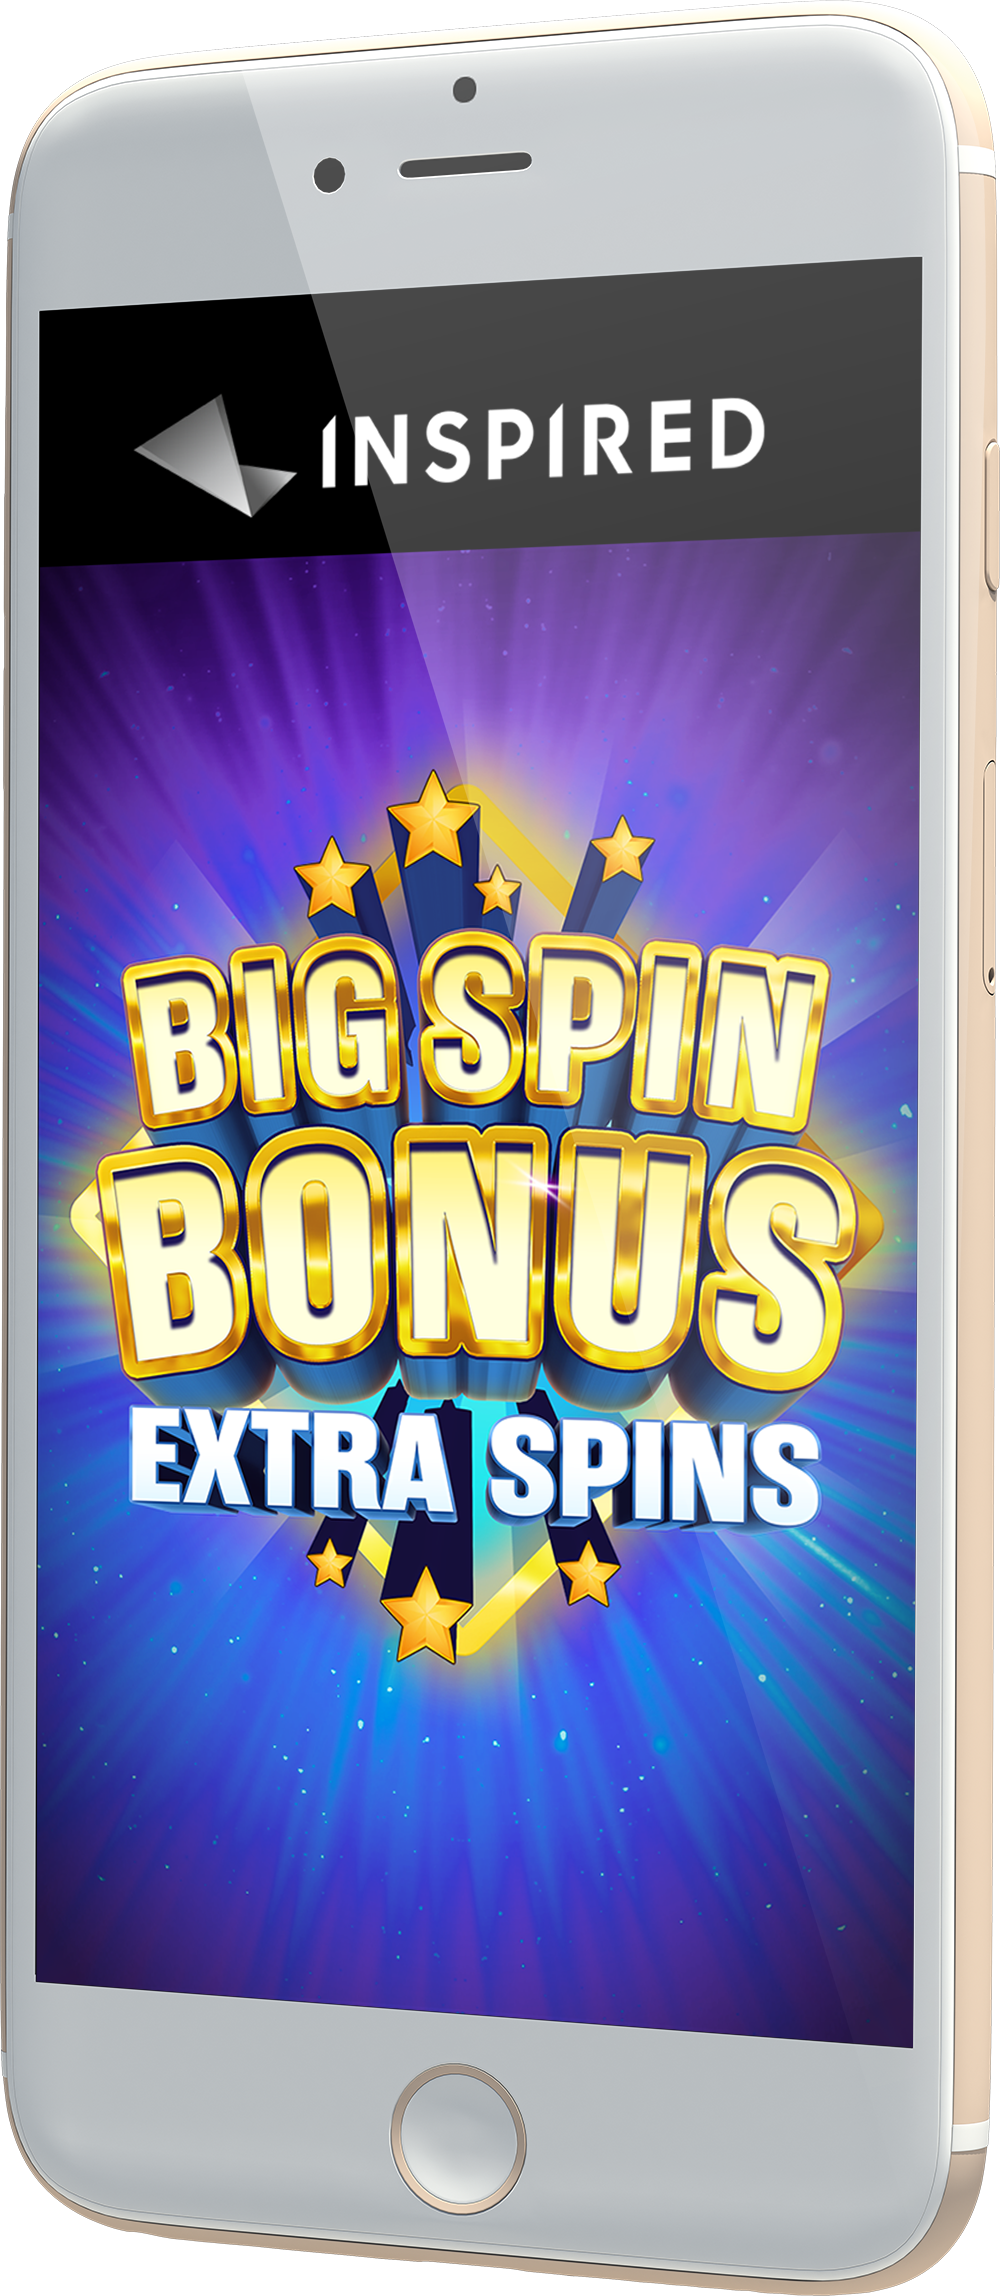 Big Spin Bonus Extra Spins iPhone